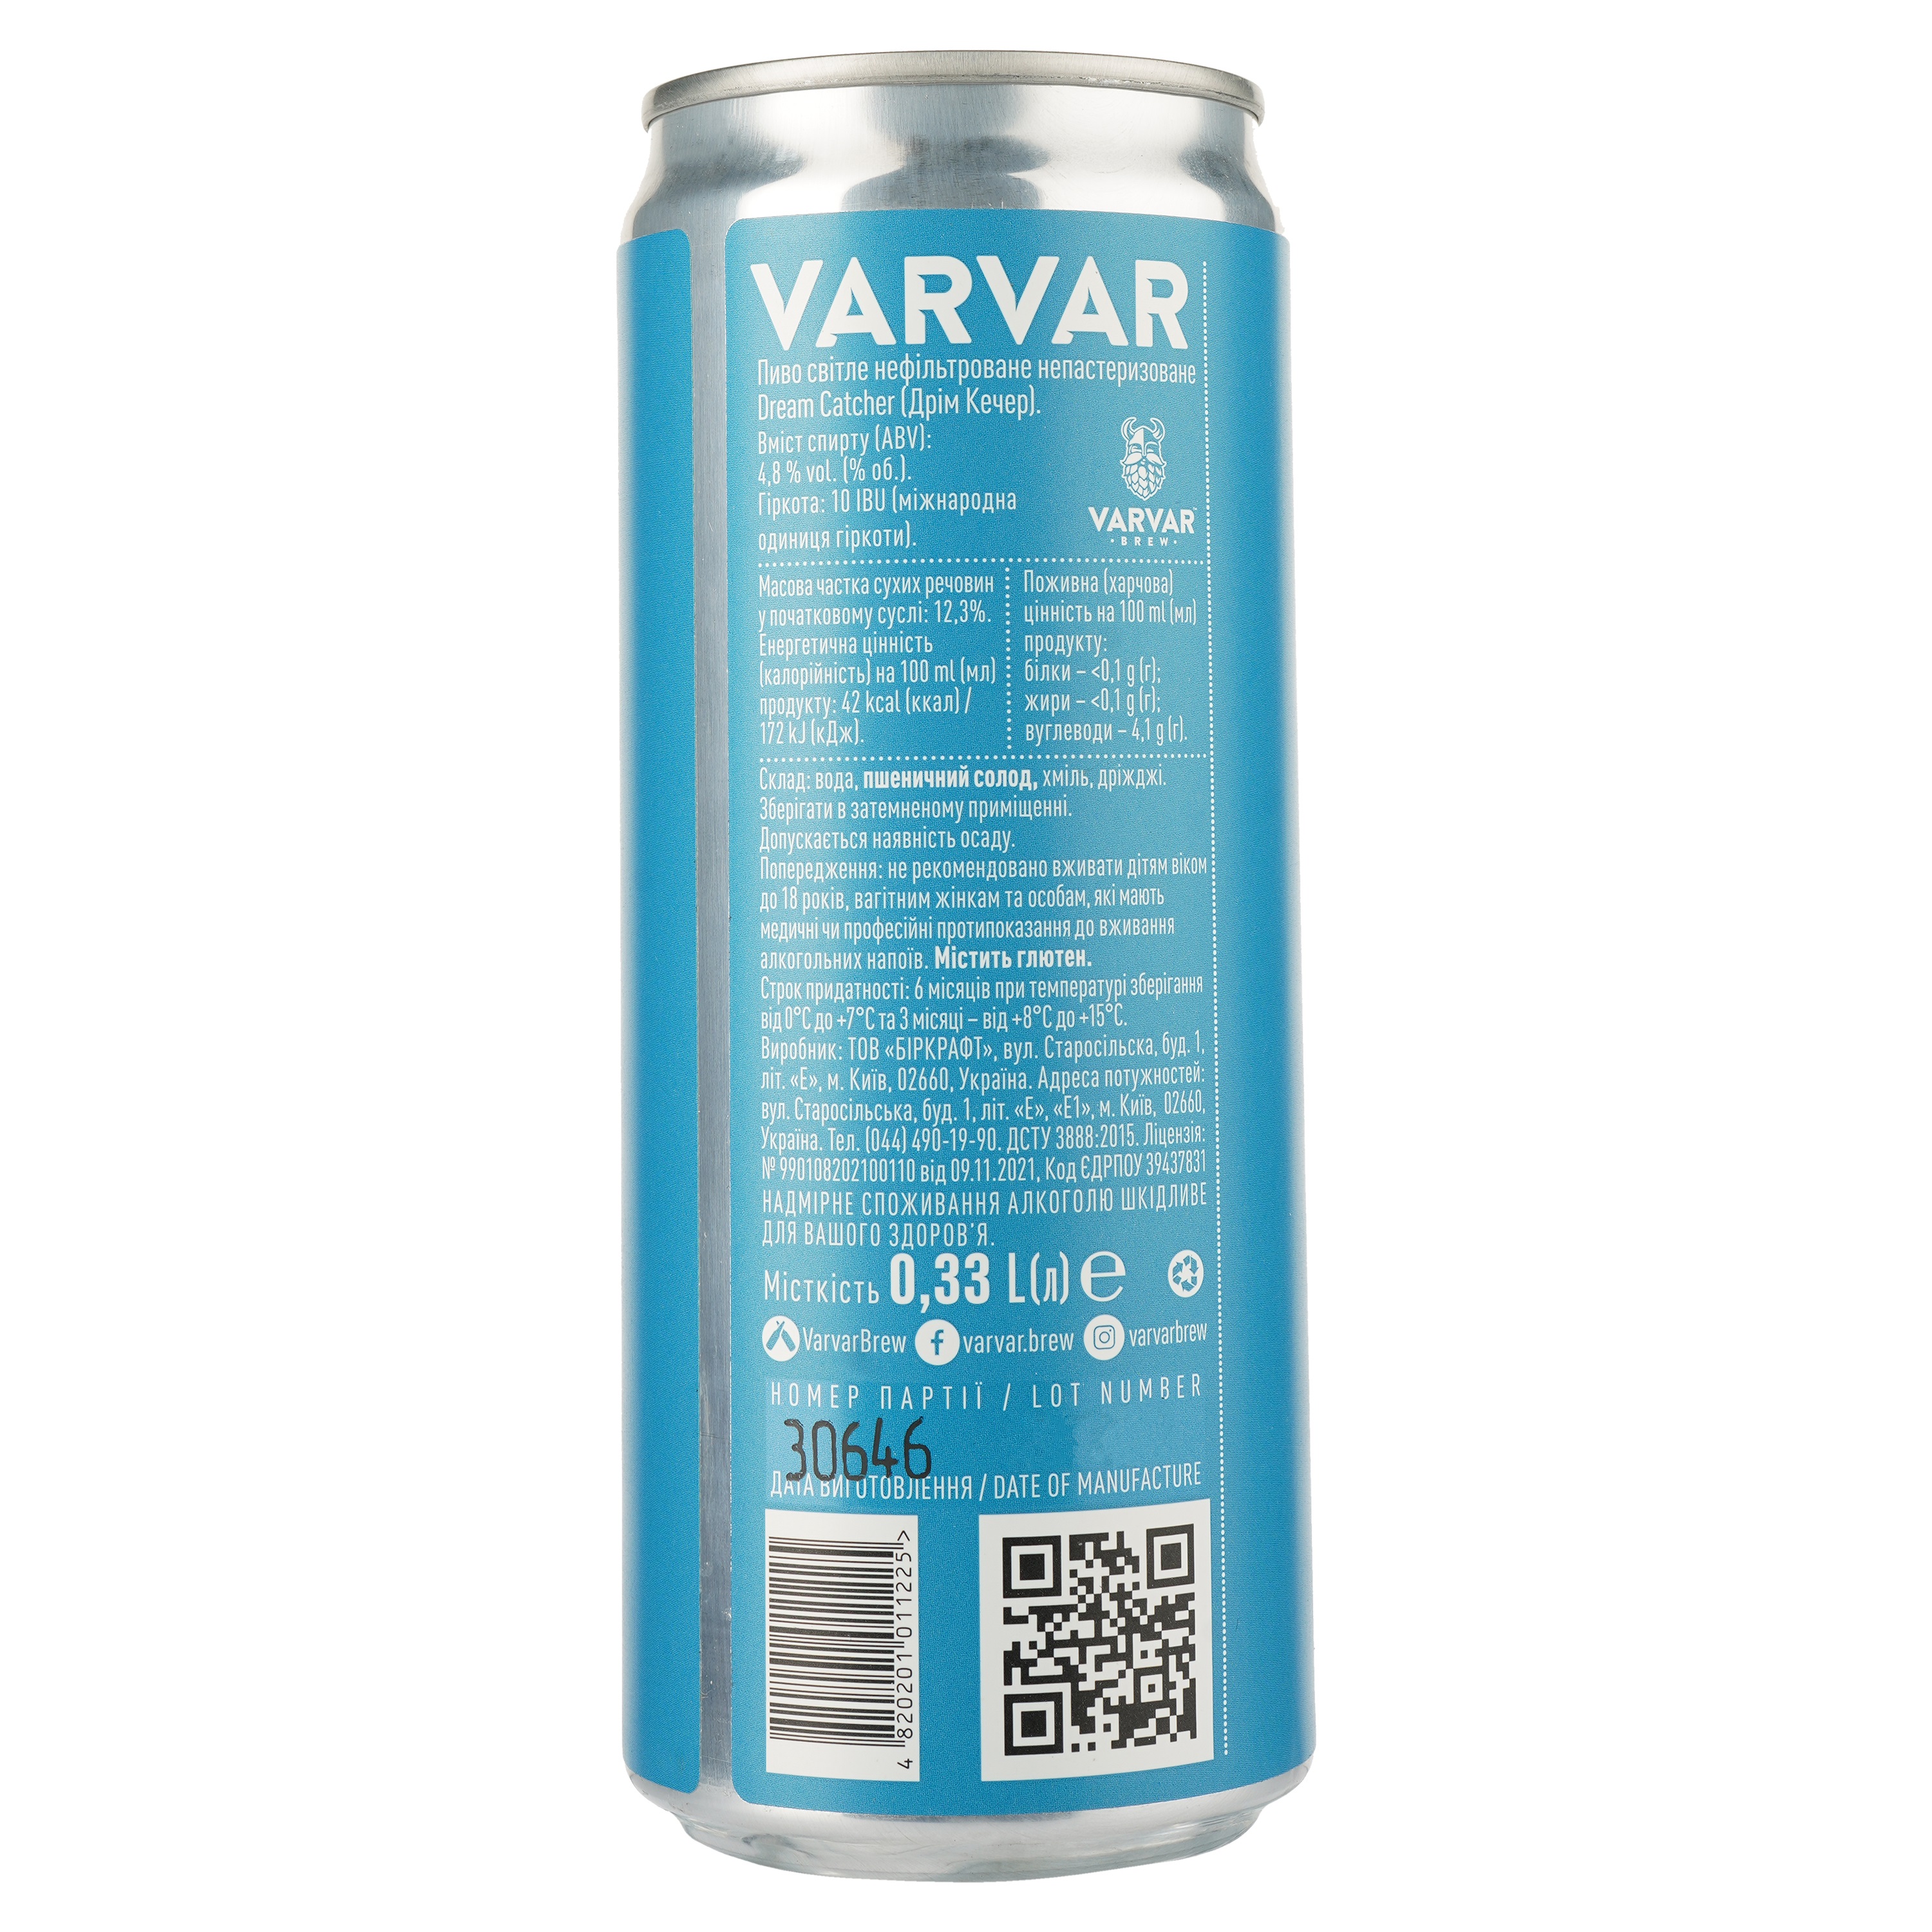 Пиво Varvar Dream Catcher, світле, нефільтроване, 4,8%, з/б, 0,33 л - фото 2